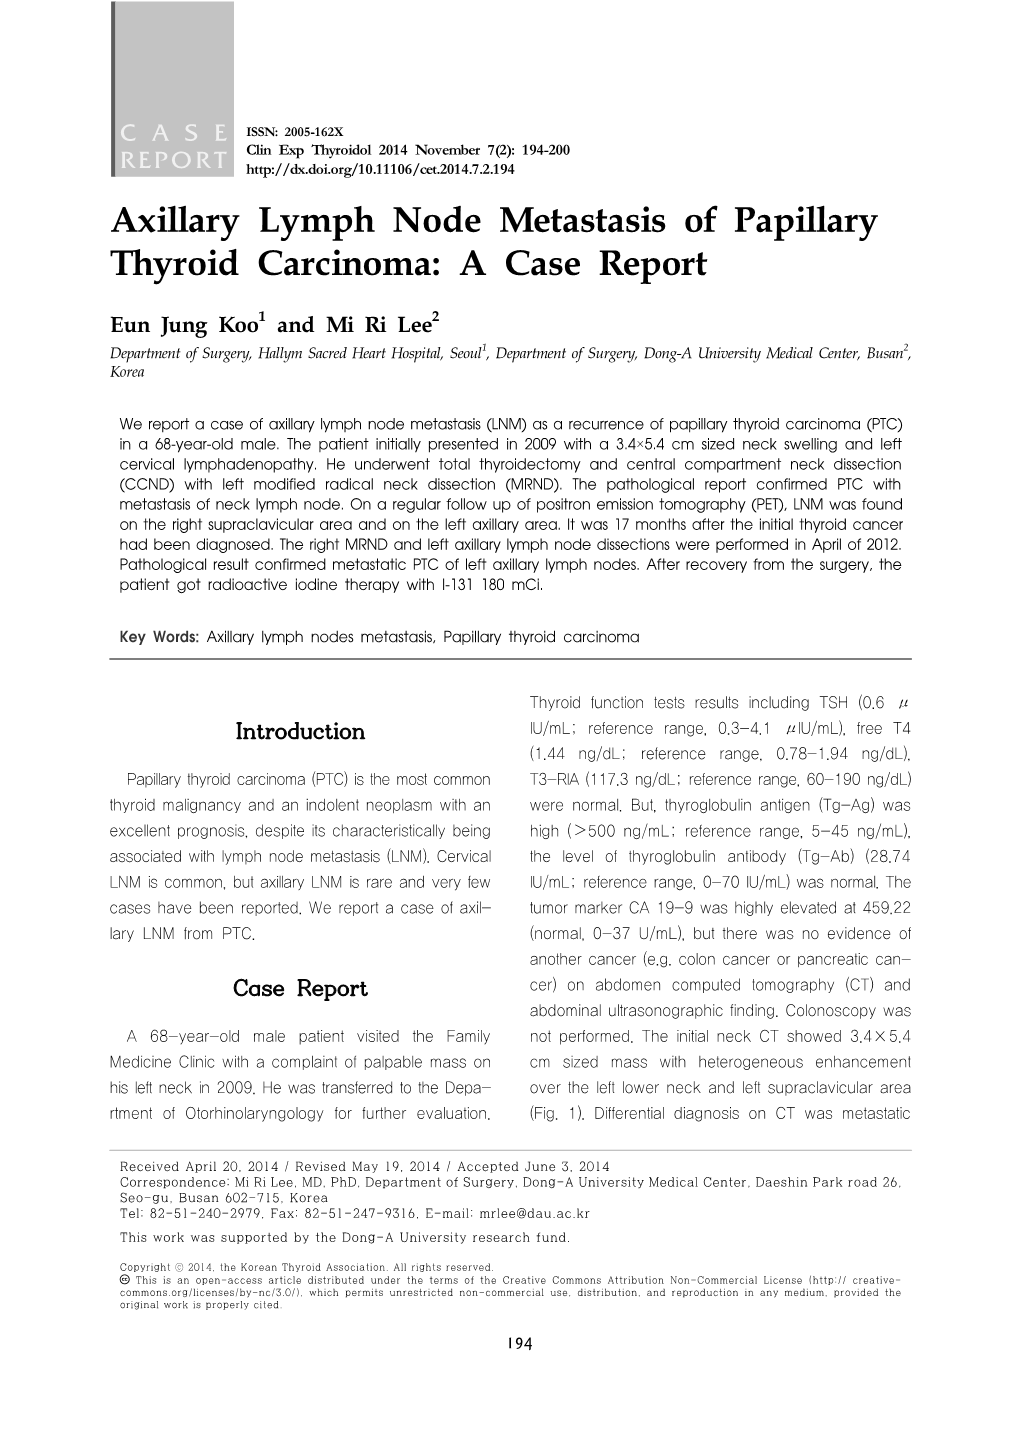 Axillary Lymph Node Metastasis of Papillary Thyroid Carcinoma: a Case Report